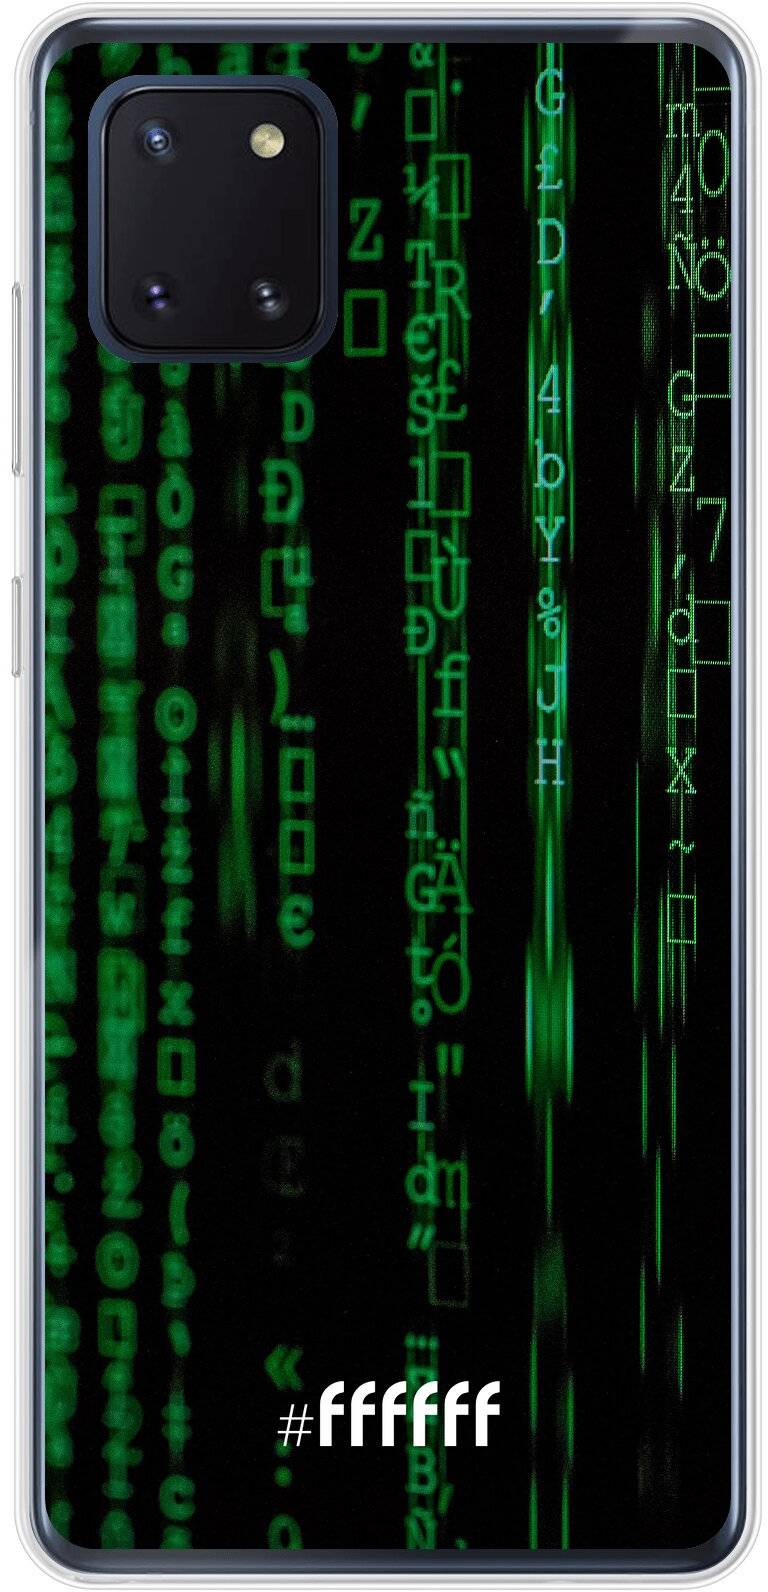 Hacking The Matrix Galaxy Note 10 Lite